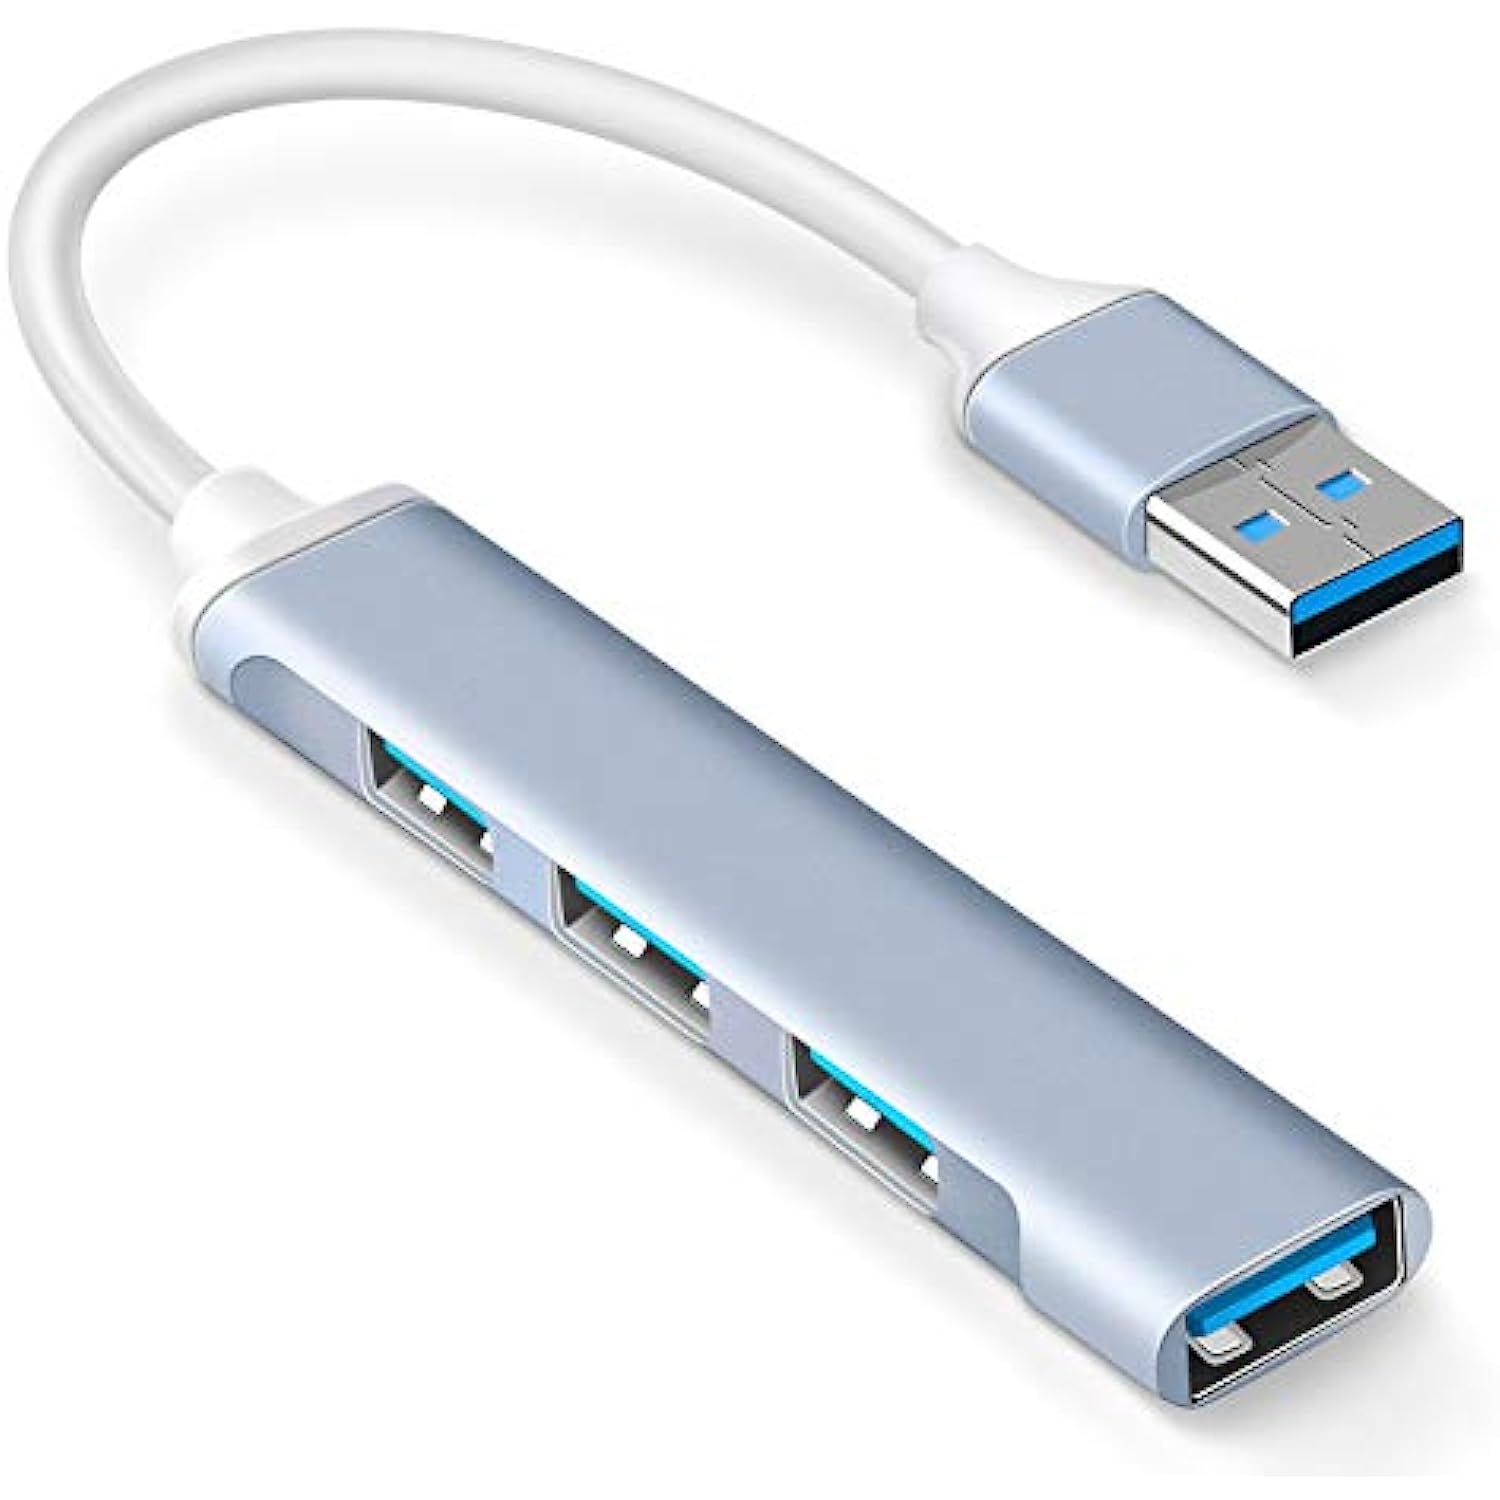 Ultra Slim Portable Data Hub Applicable for Laptop, iMac Pro, MacBook Air, Mac, Notebook PC, USB Splitter Aluminum